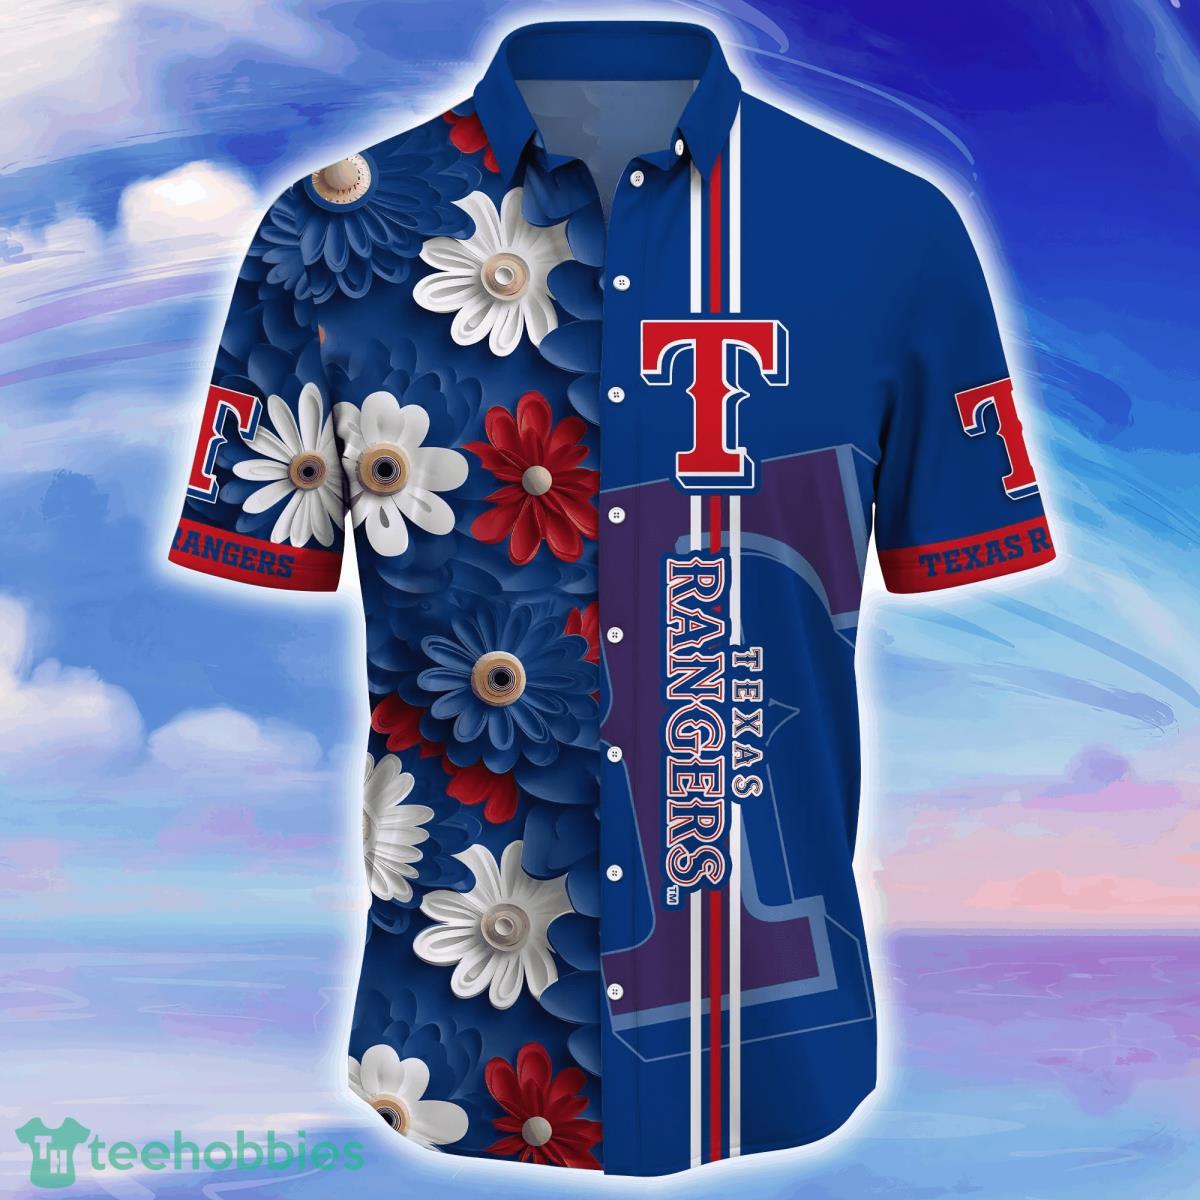 Texas Rangers Women MLB Jerseys for sale